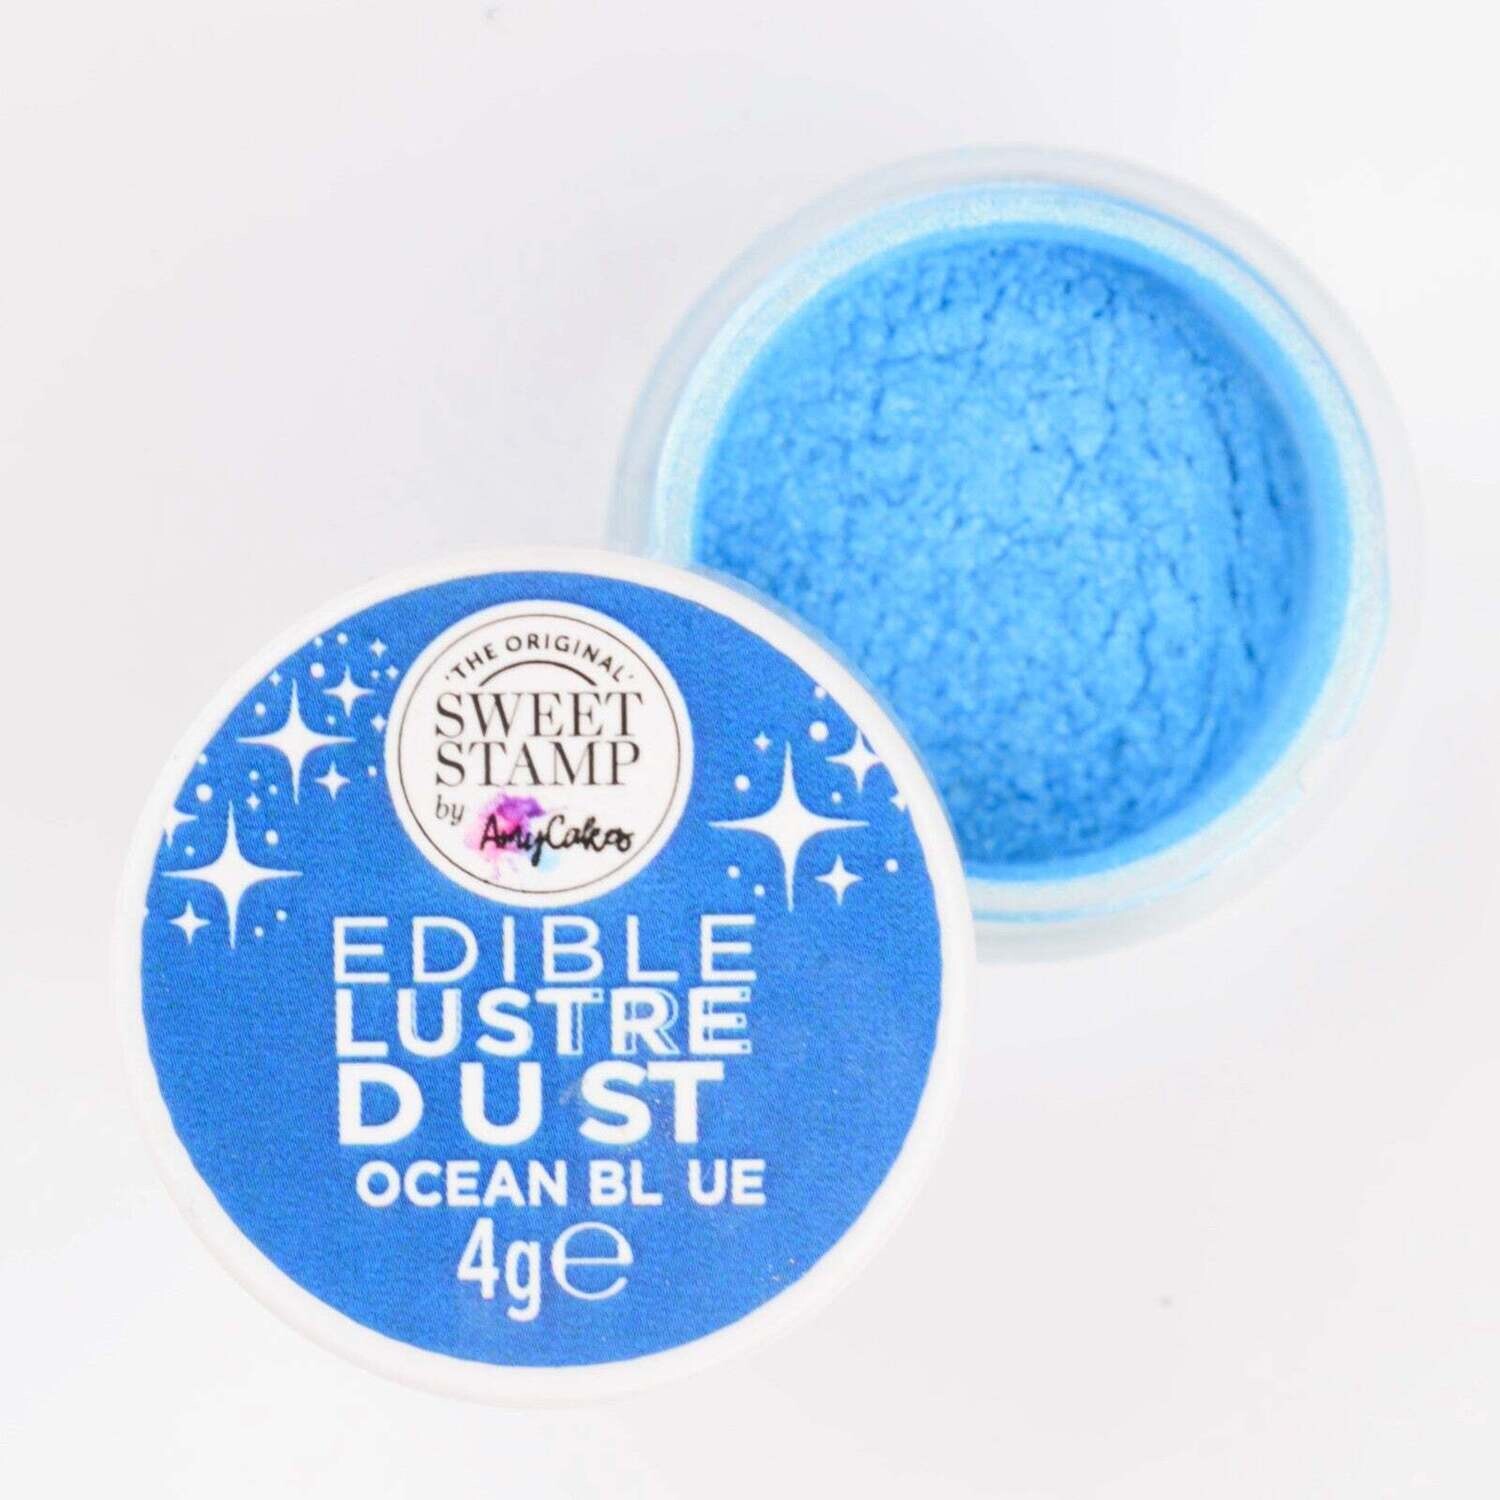 Sweet Stamp Edible Lustre Dust -OCEAN BLUE - Βρώσιμη σκόνη γυαλιστερή Μπλε 4g